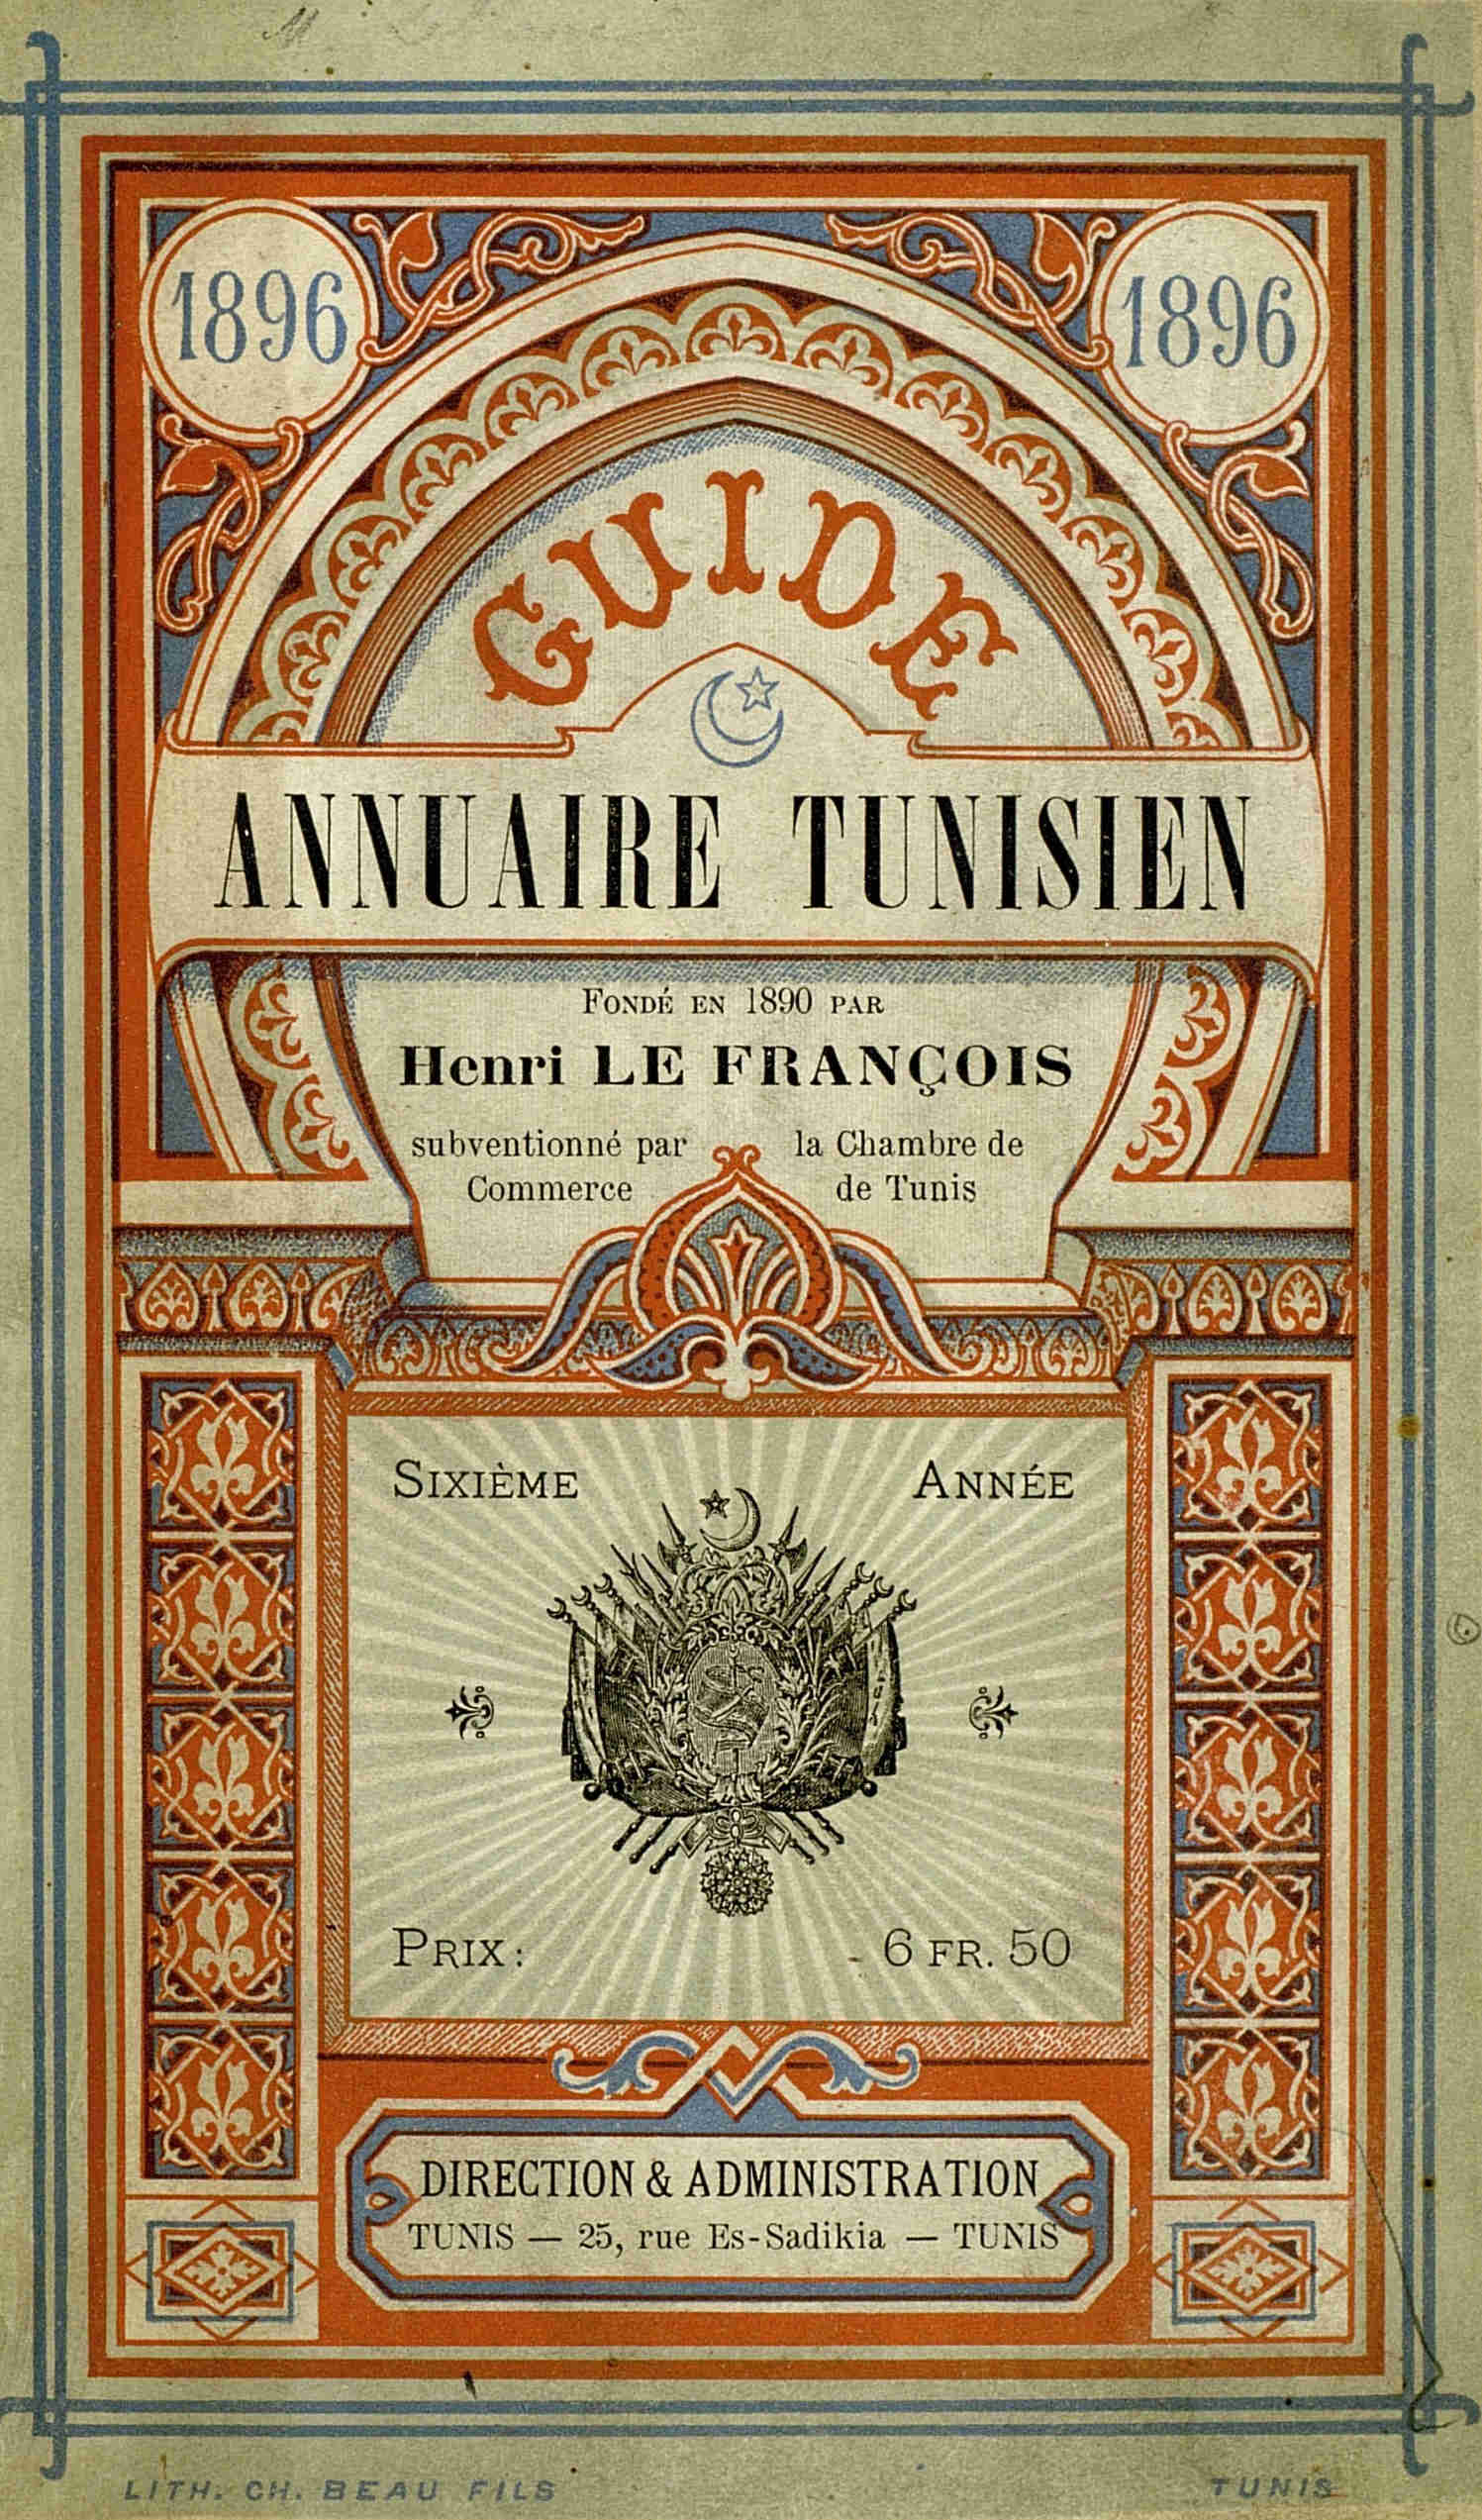 Guide annuaire tunisien (couverture)